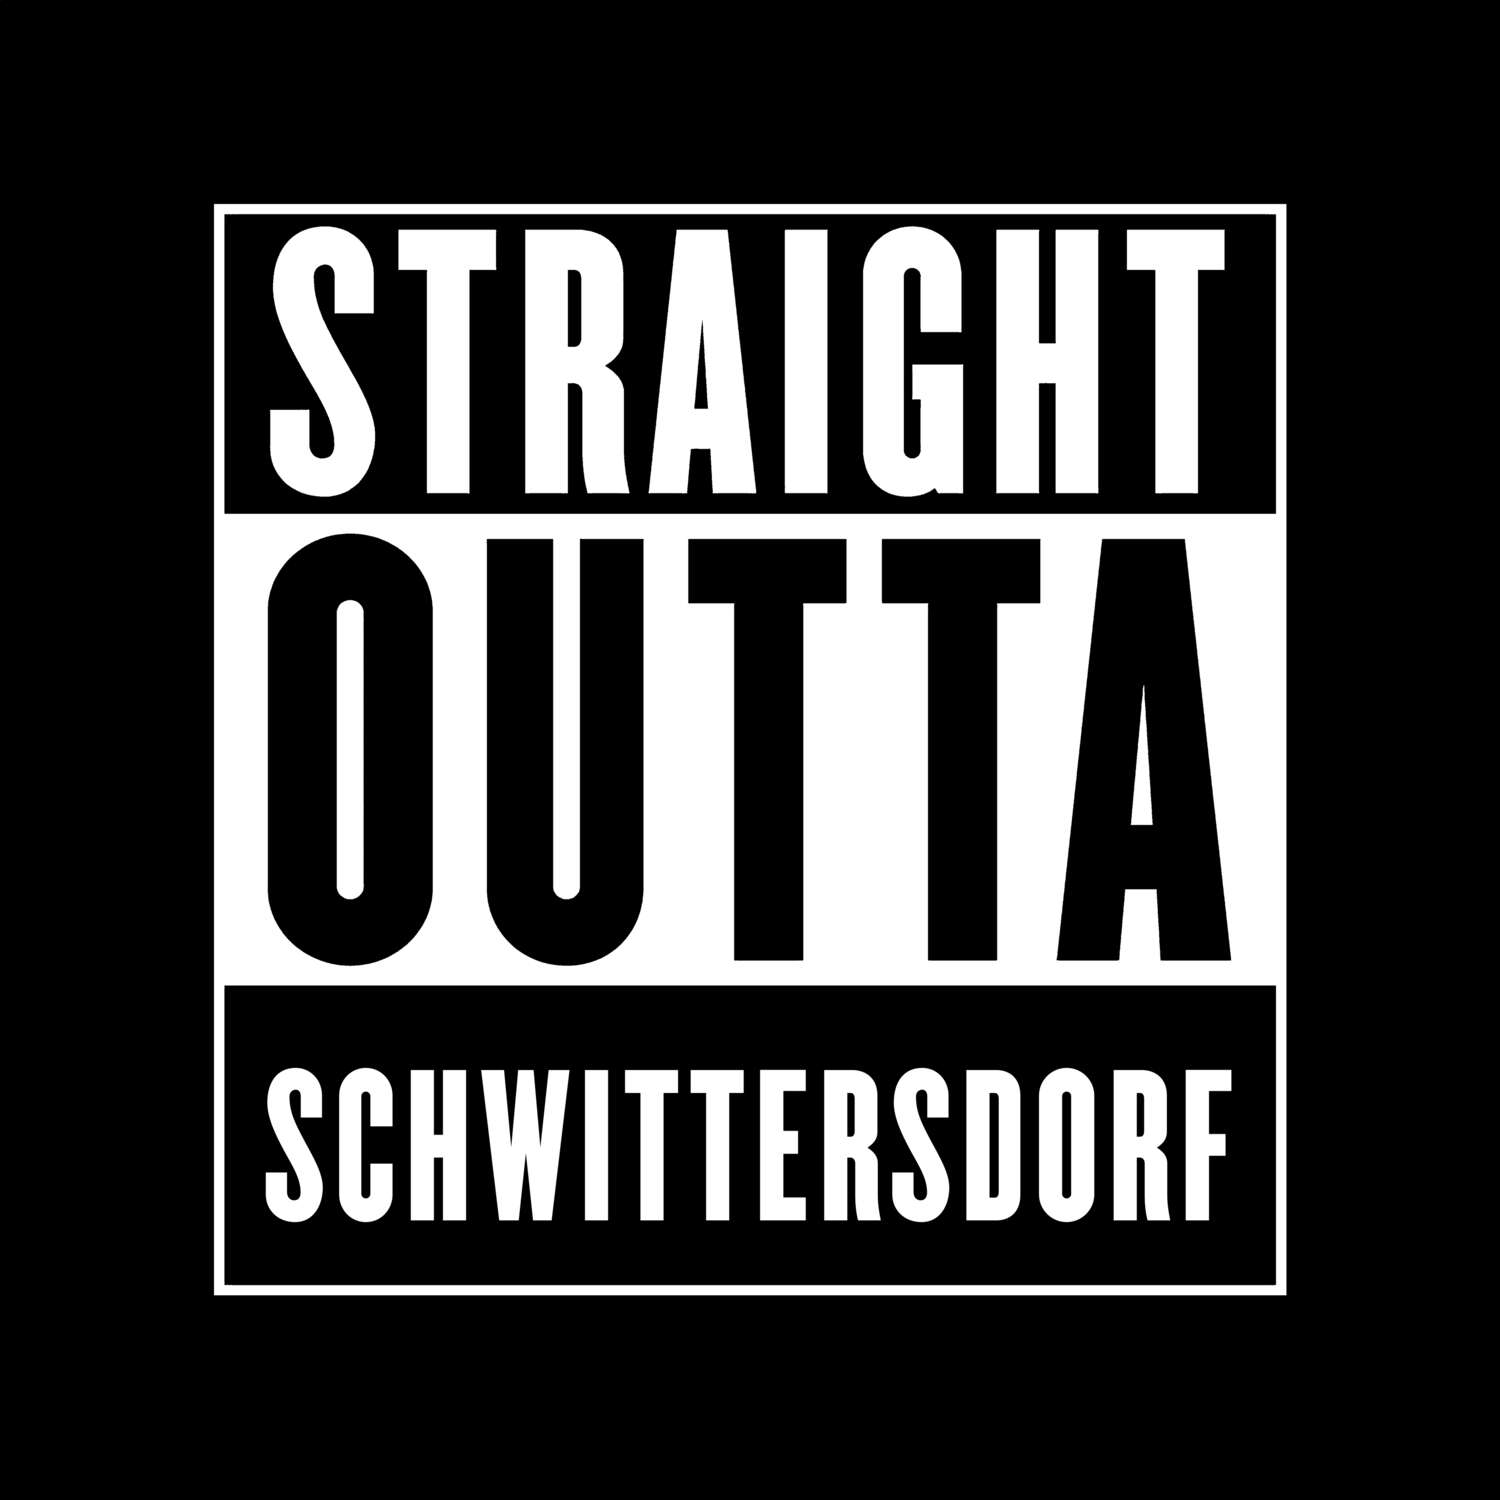 Schwittersdorf T-Shirt »Straight Outta«